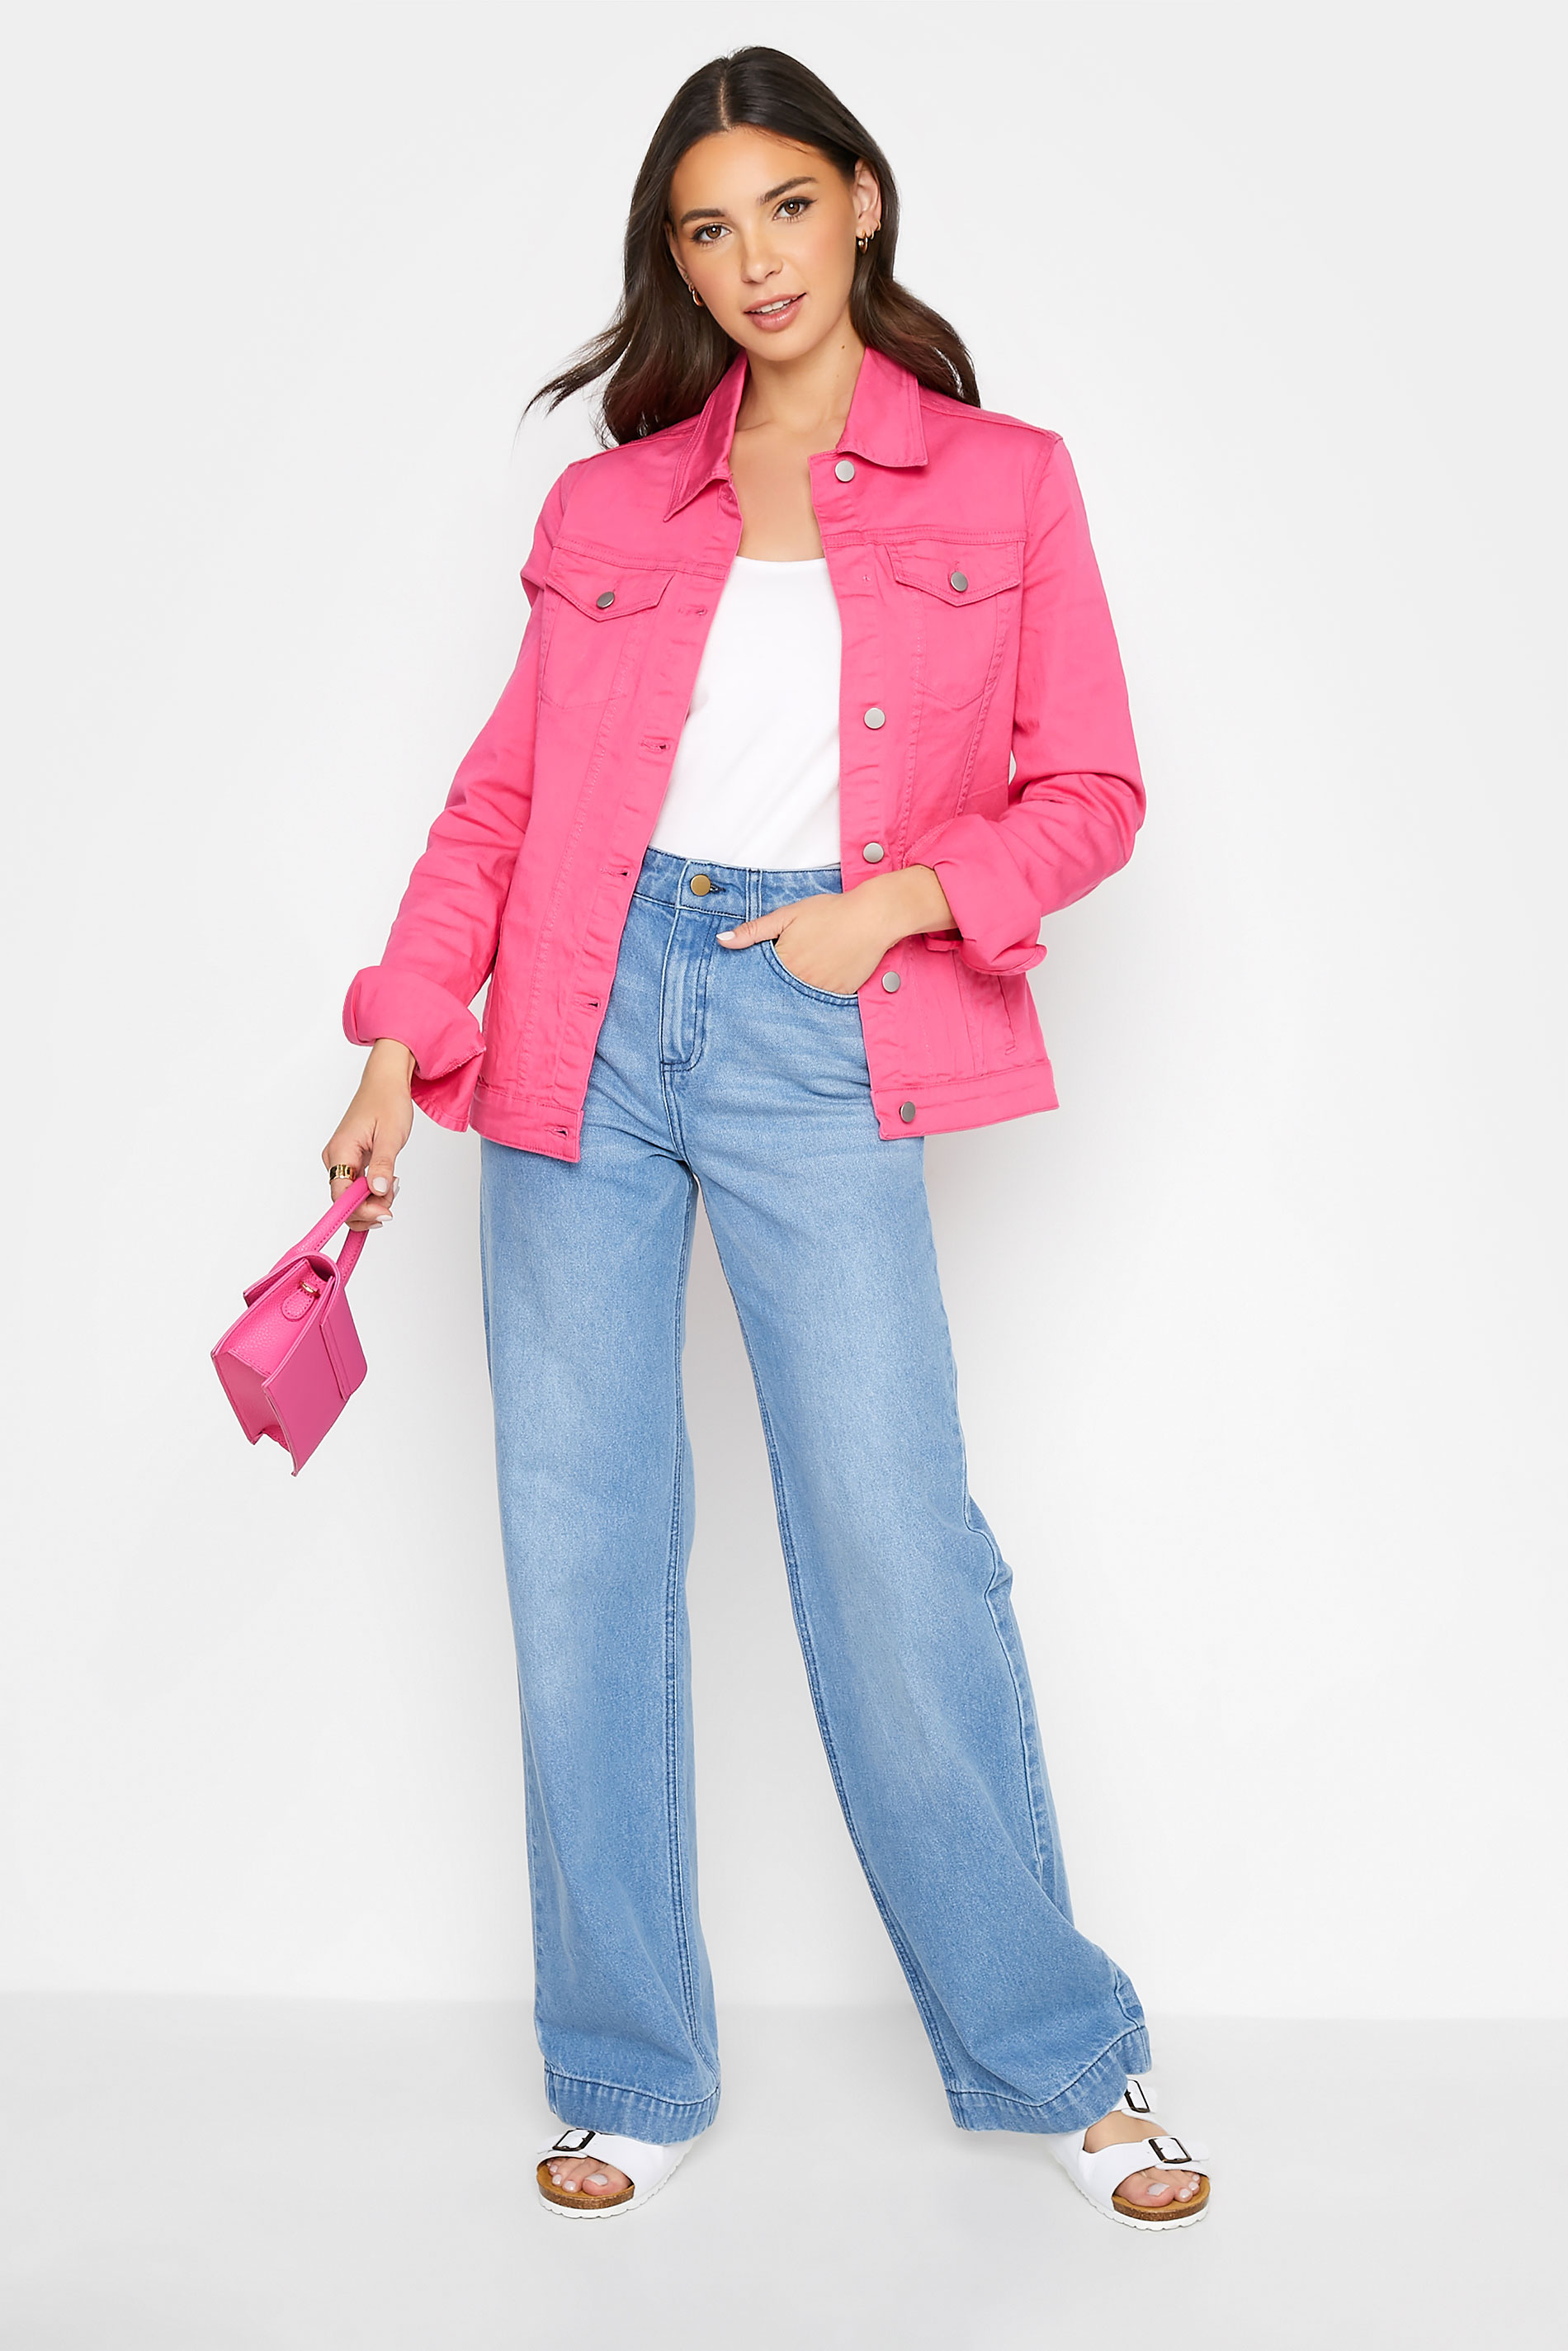 Women's Cotton Jacket - Hot Pink - Uniform Edit